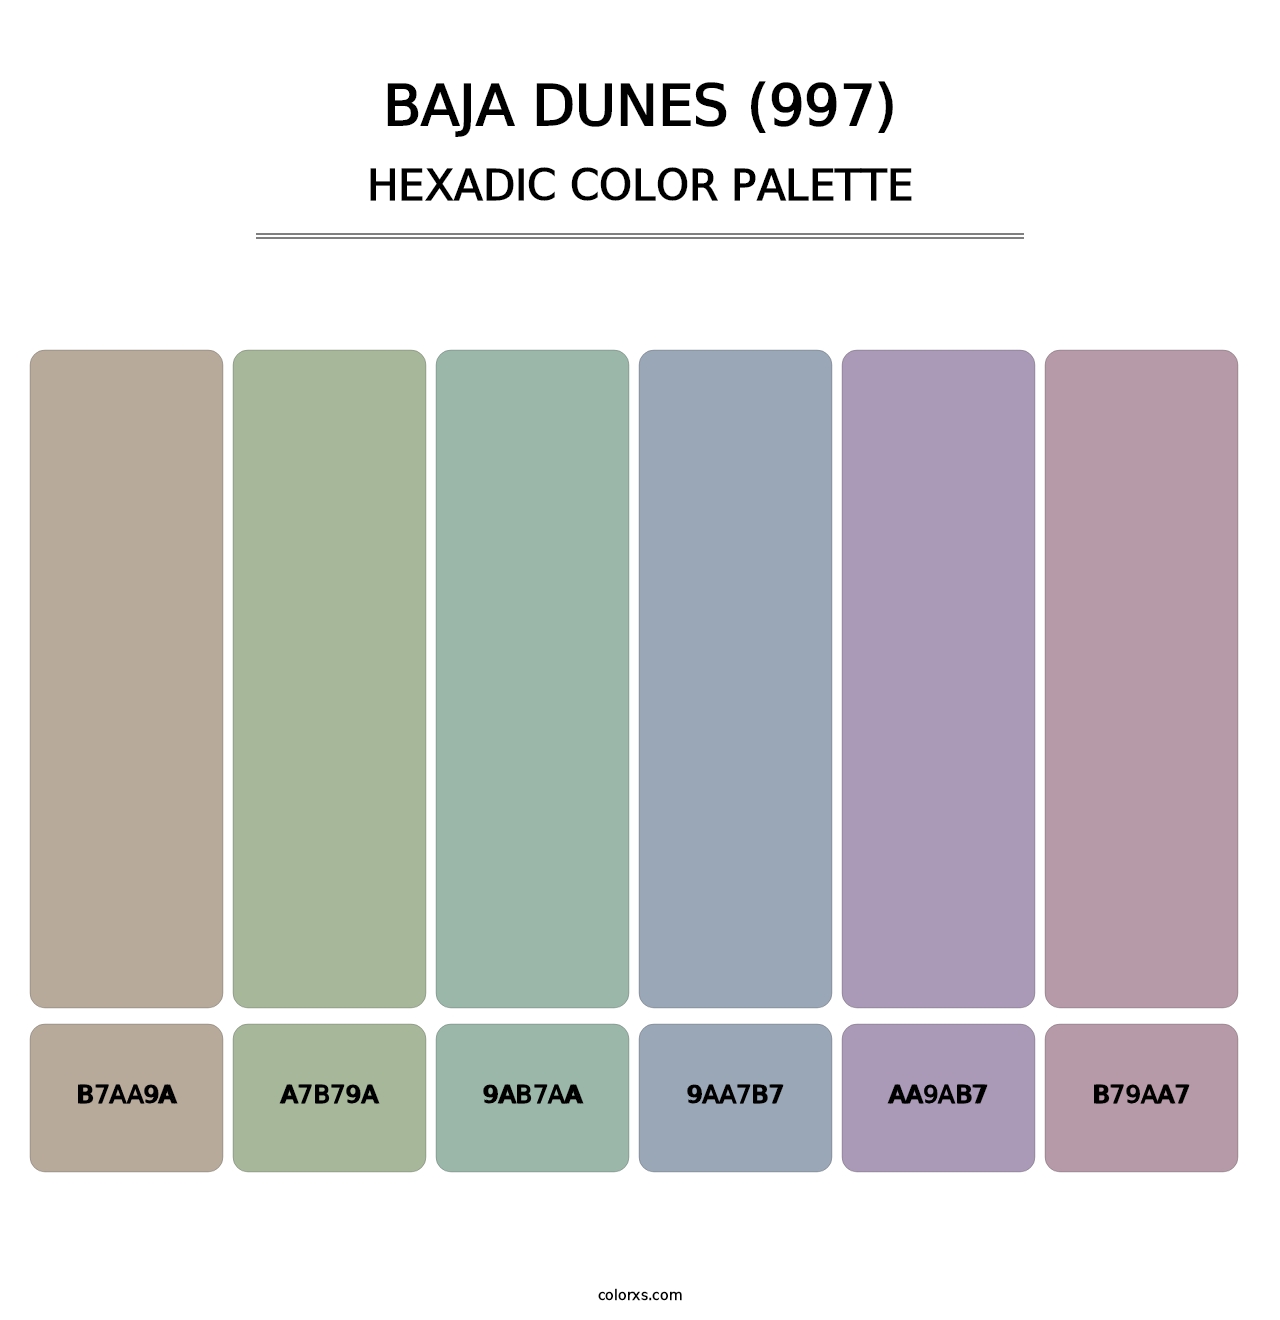 Baja Dunes (997) - Hexadic Color Palette